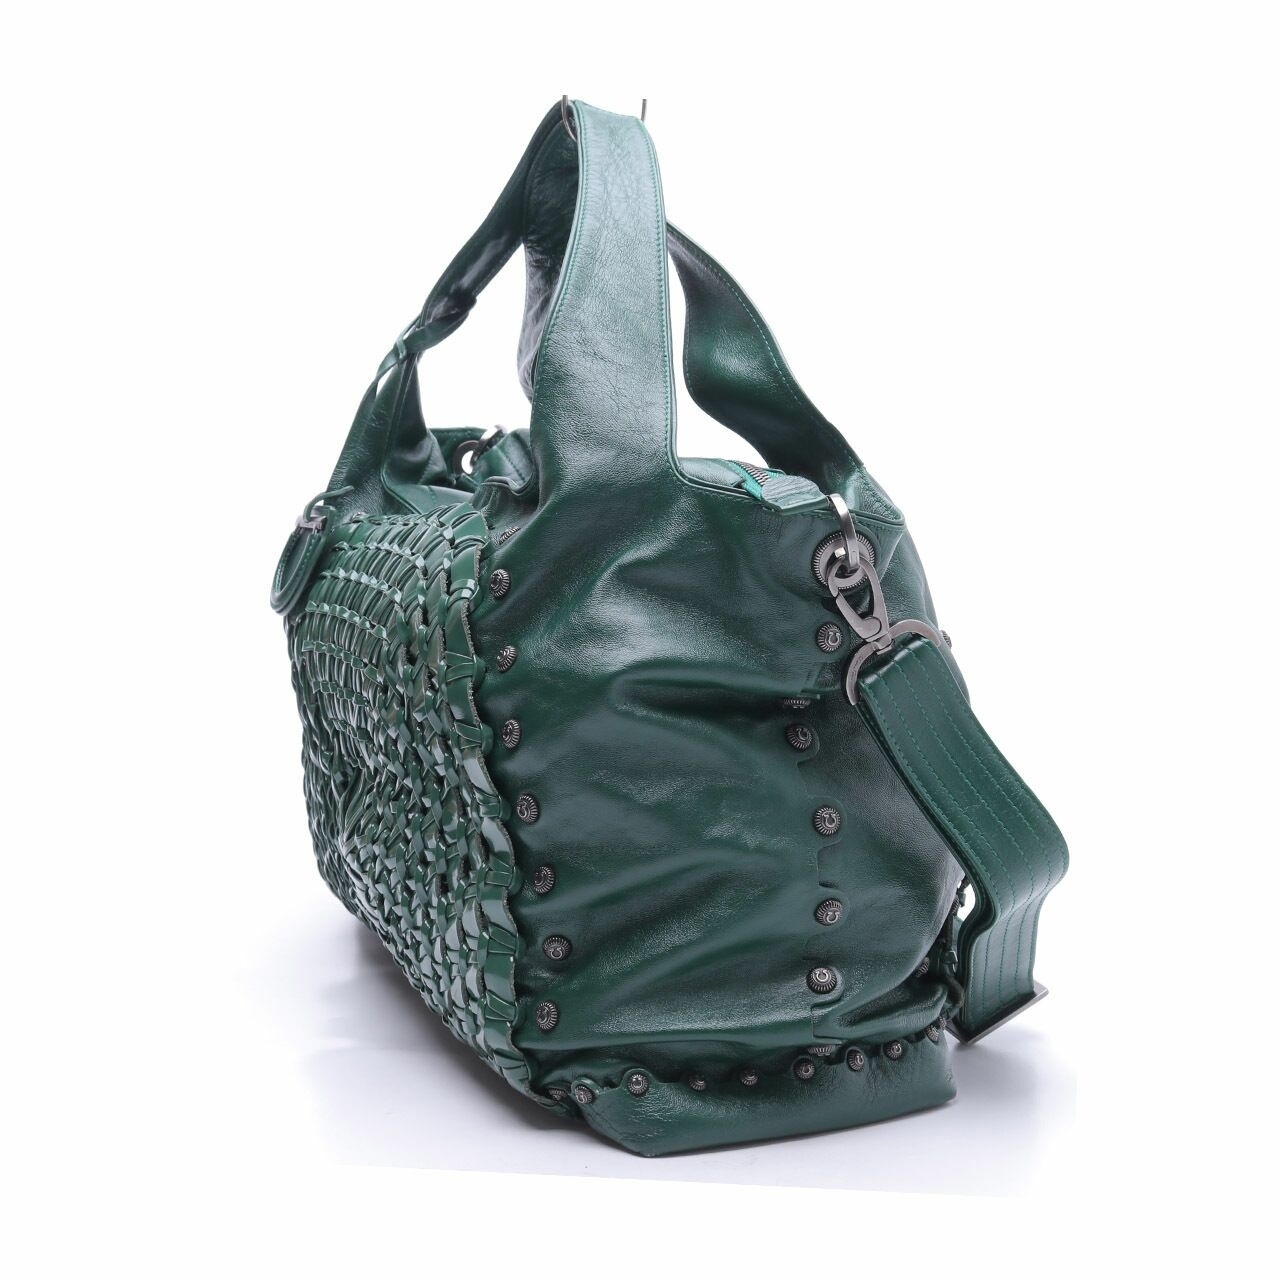 Salvatore Ferragamo Green Woven Leather Edera Hobo Shoulder Bag